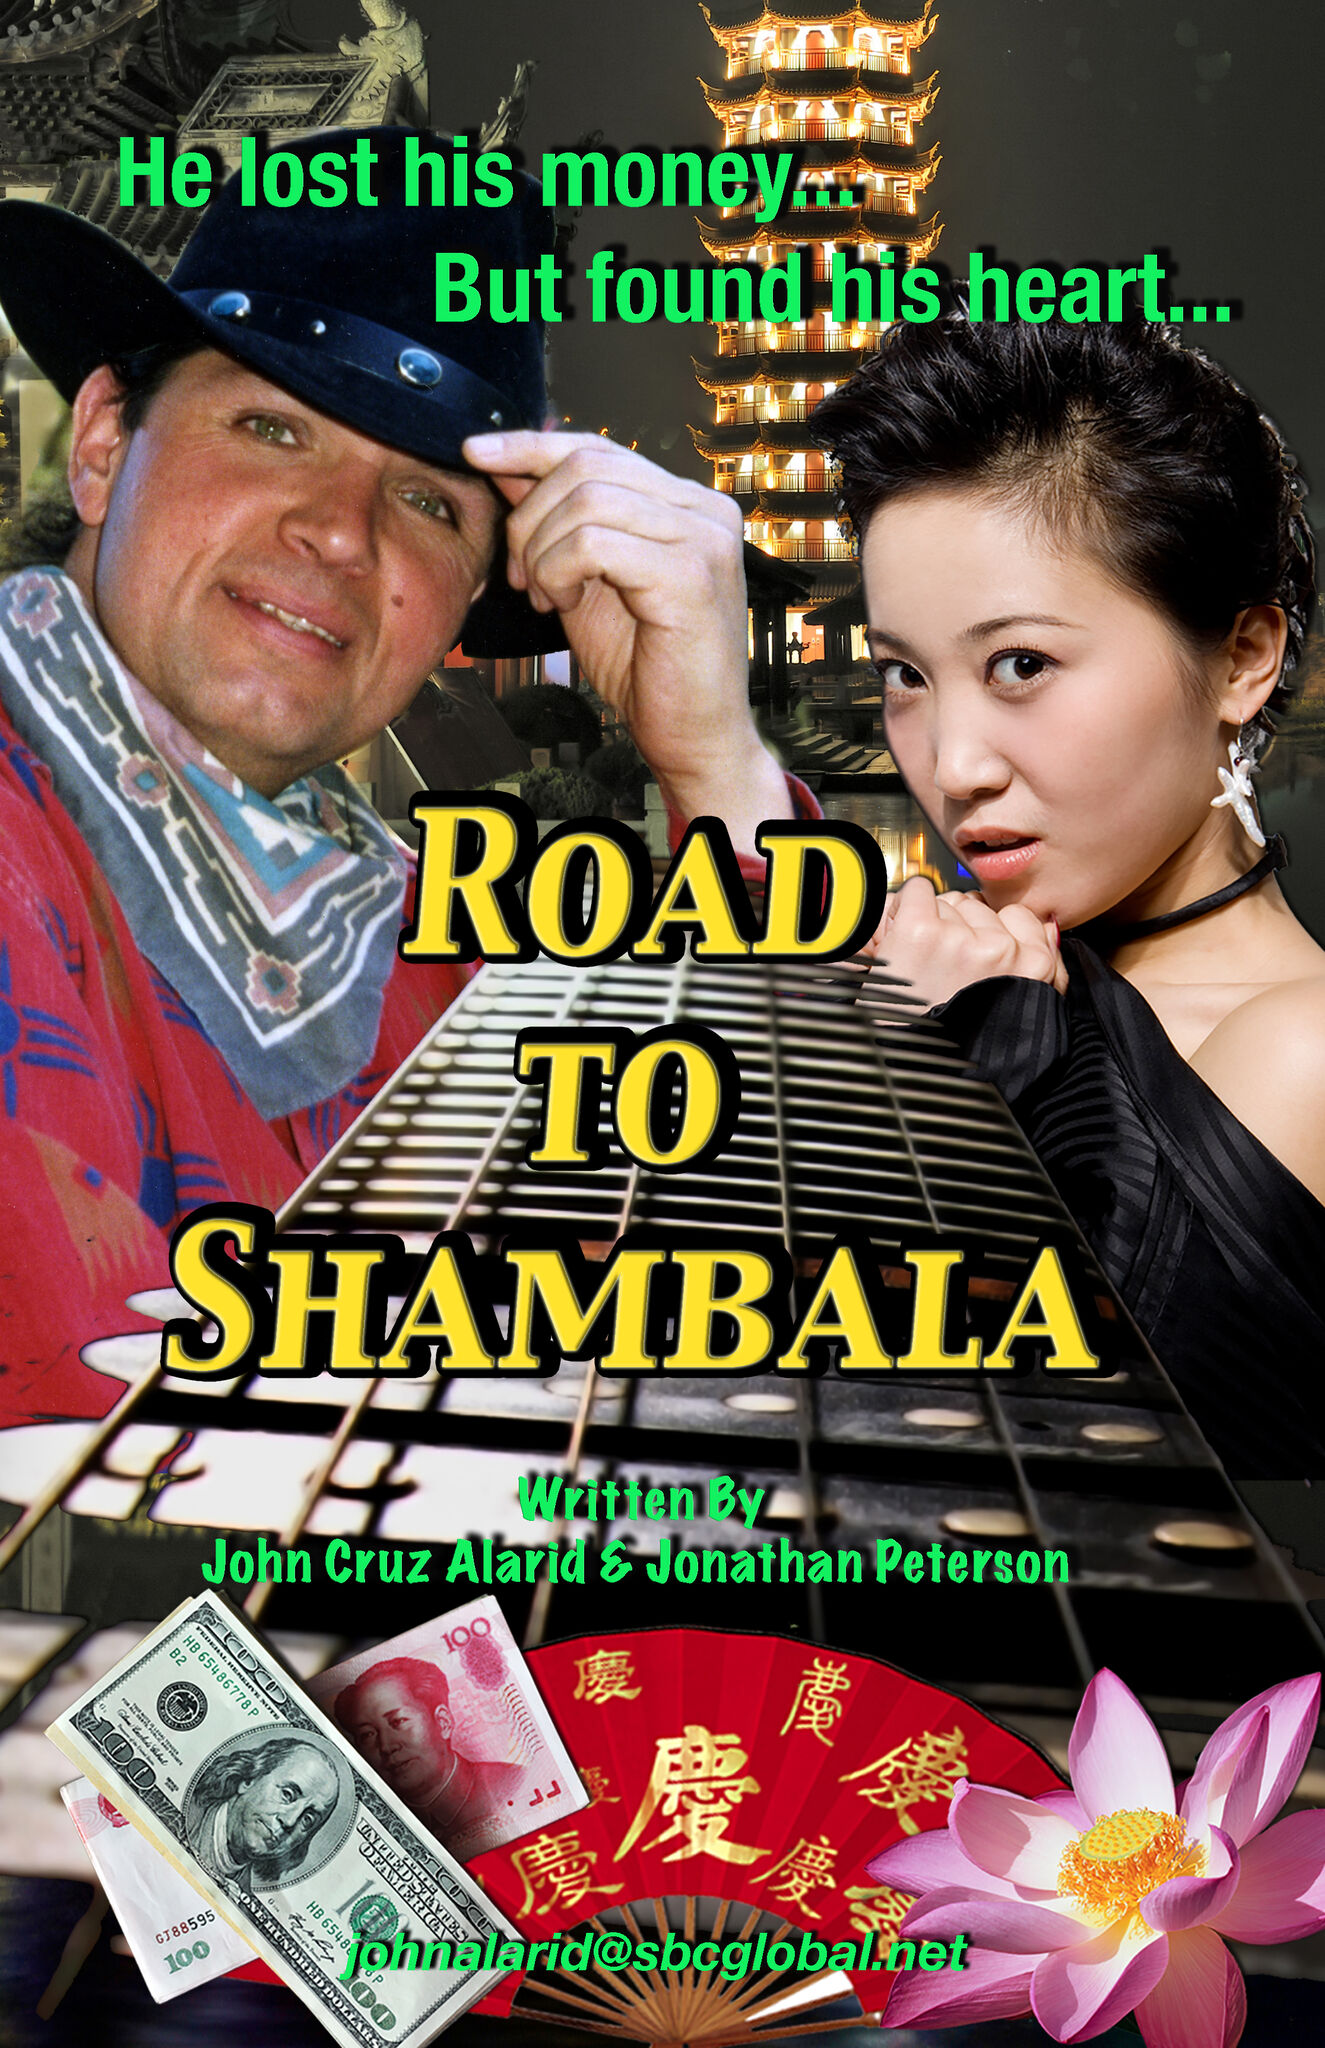 THE ROAD TO SHAMBALA